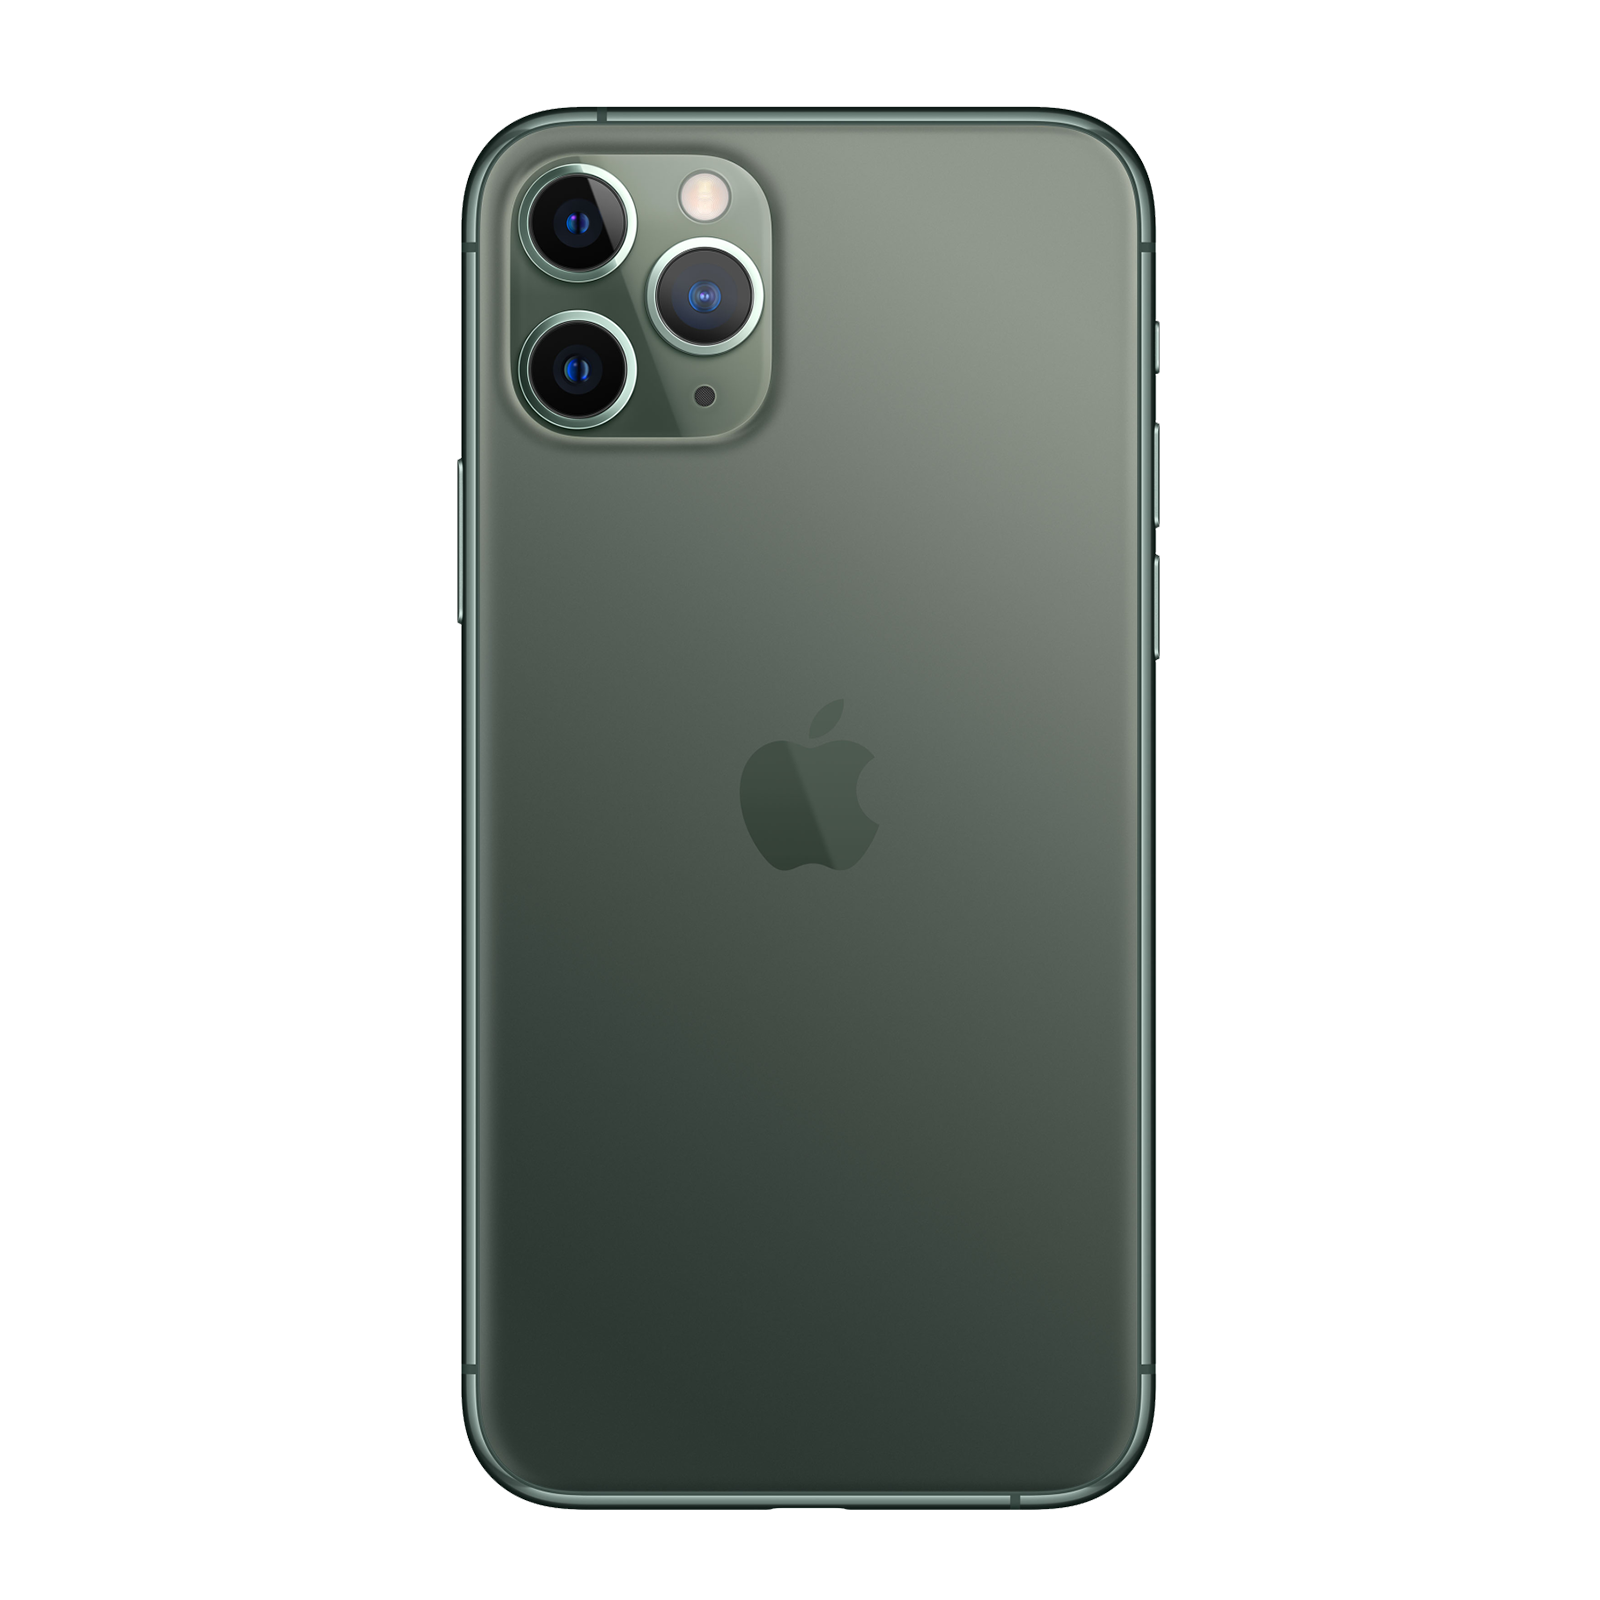 Apple iPhone 11 Pro Max 512GB Midnight Green Fair - Unlocked